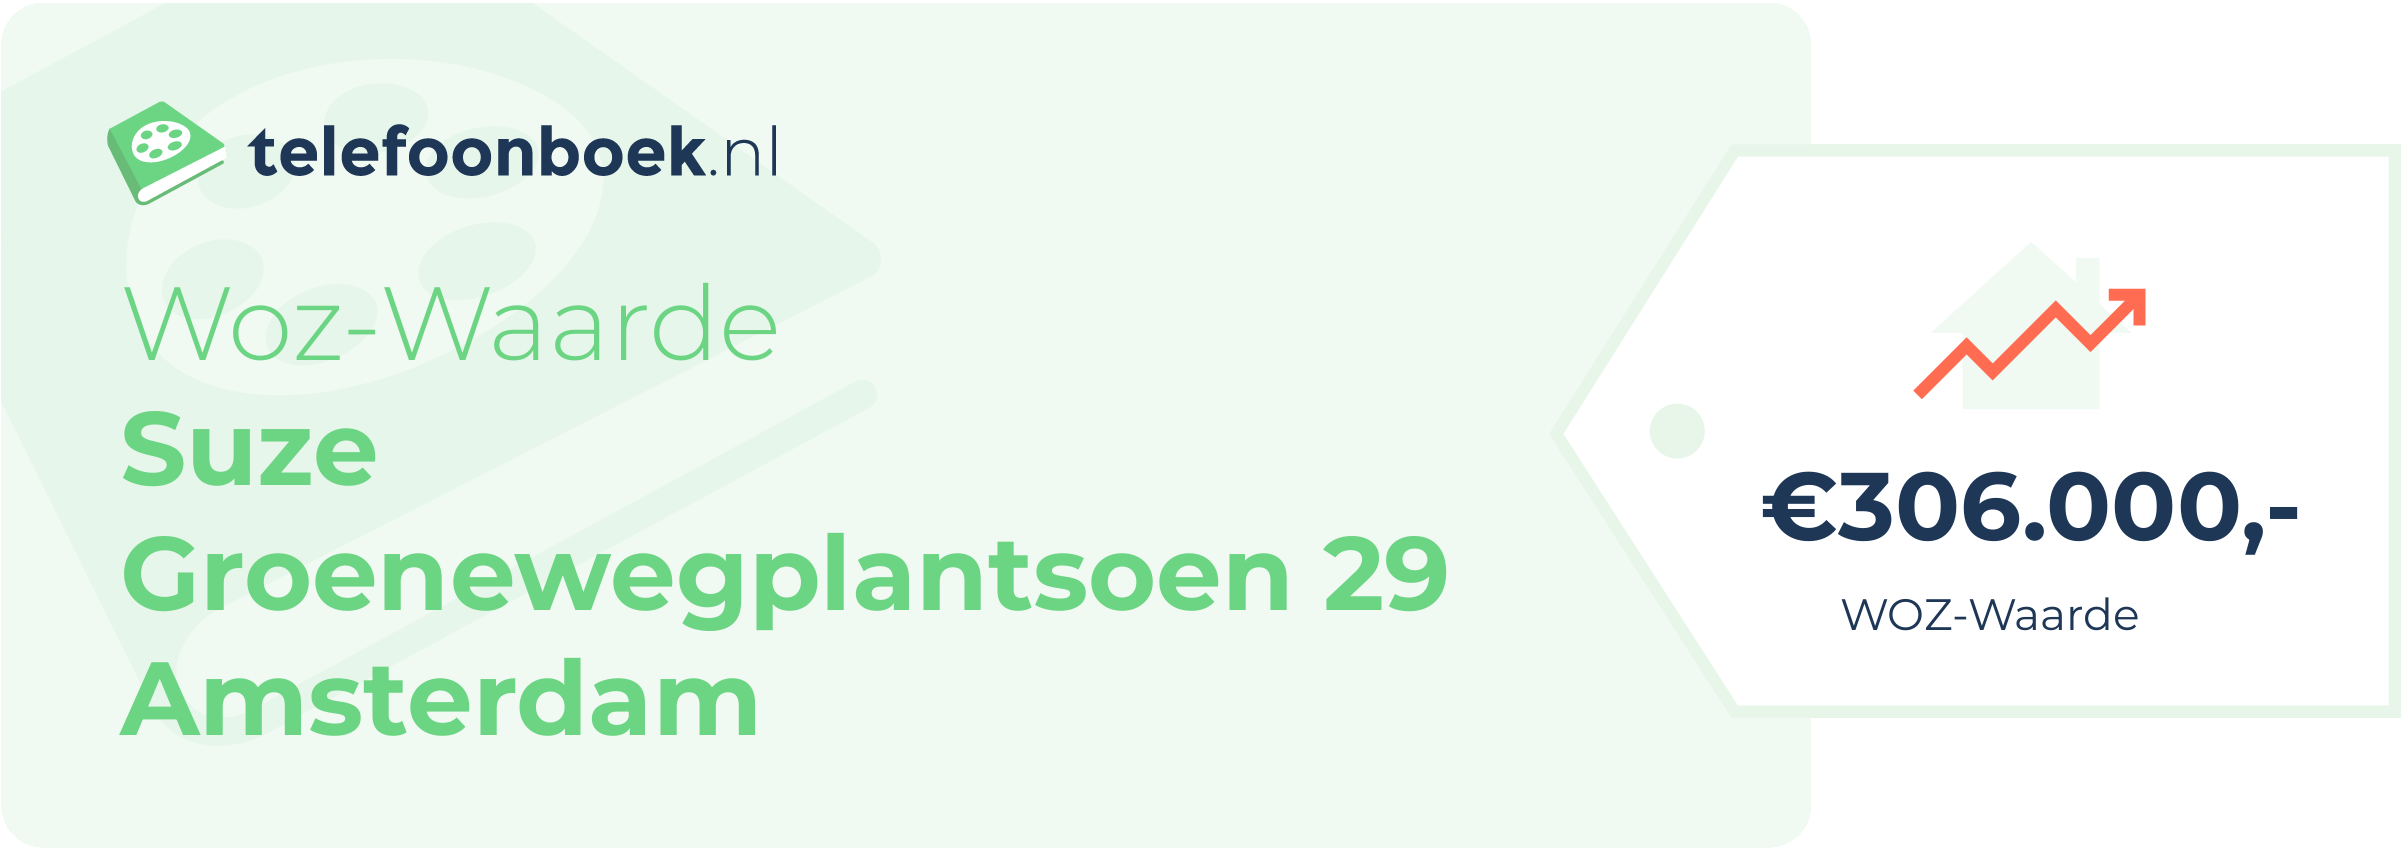 WOZ-waarde Suze Groenewegplantsoen 29 Amsterdam